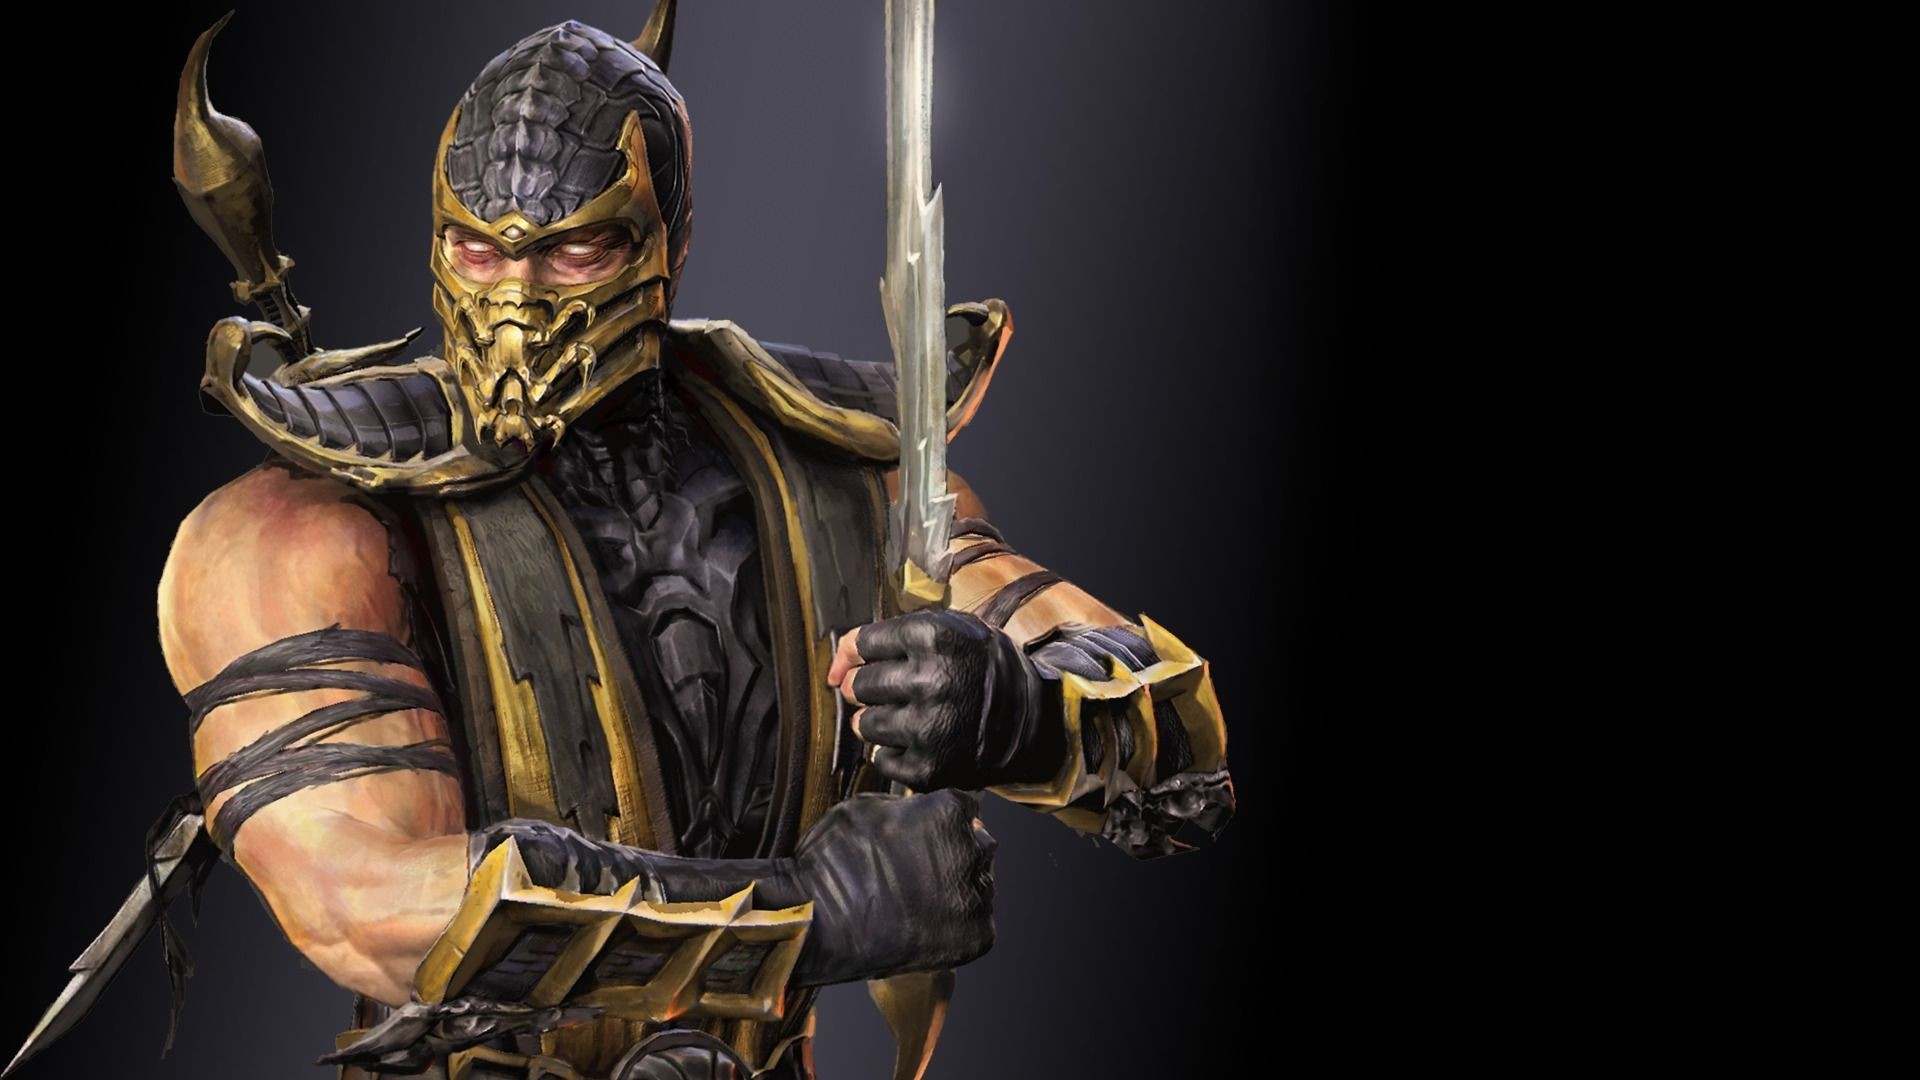 Scorpion – Mortal Kombat – Deadly Alliance wallpaper – Free Wide … |  Download Wallpaper | Pinterest | Widescreen wallpaper, Wallpaper and Storms